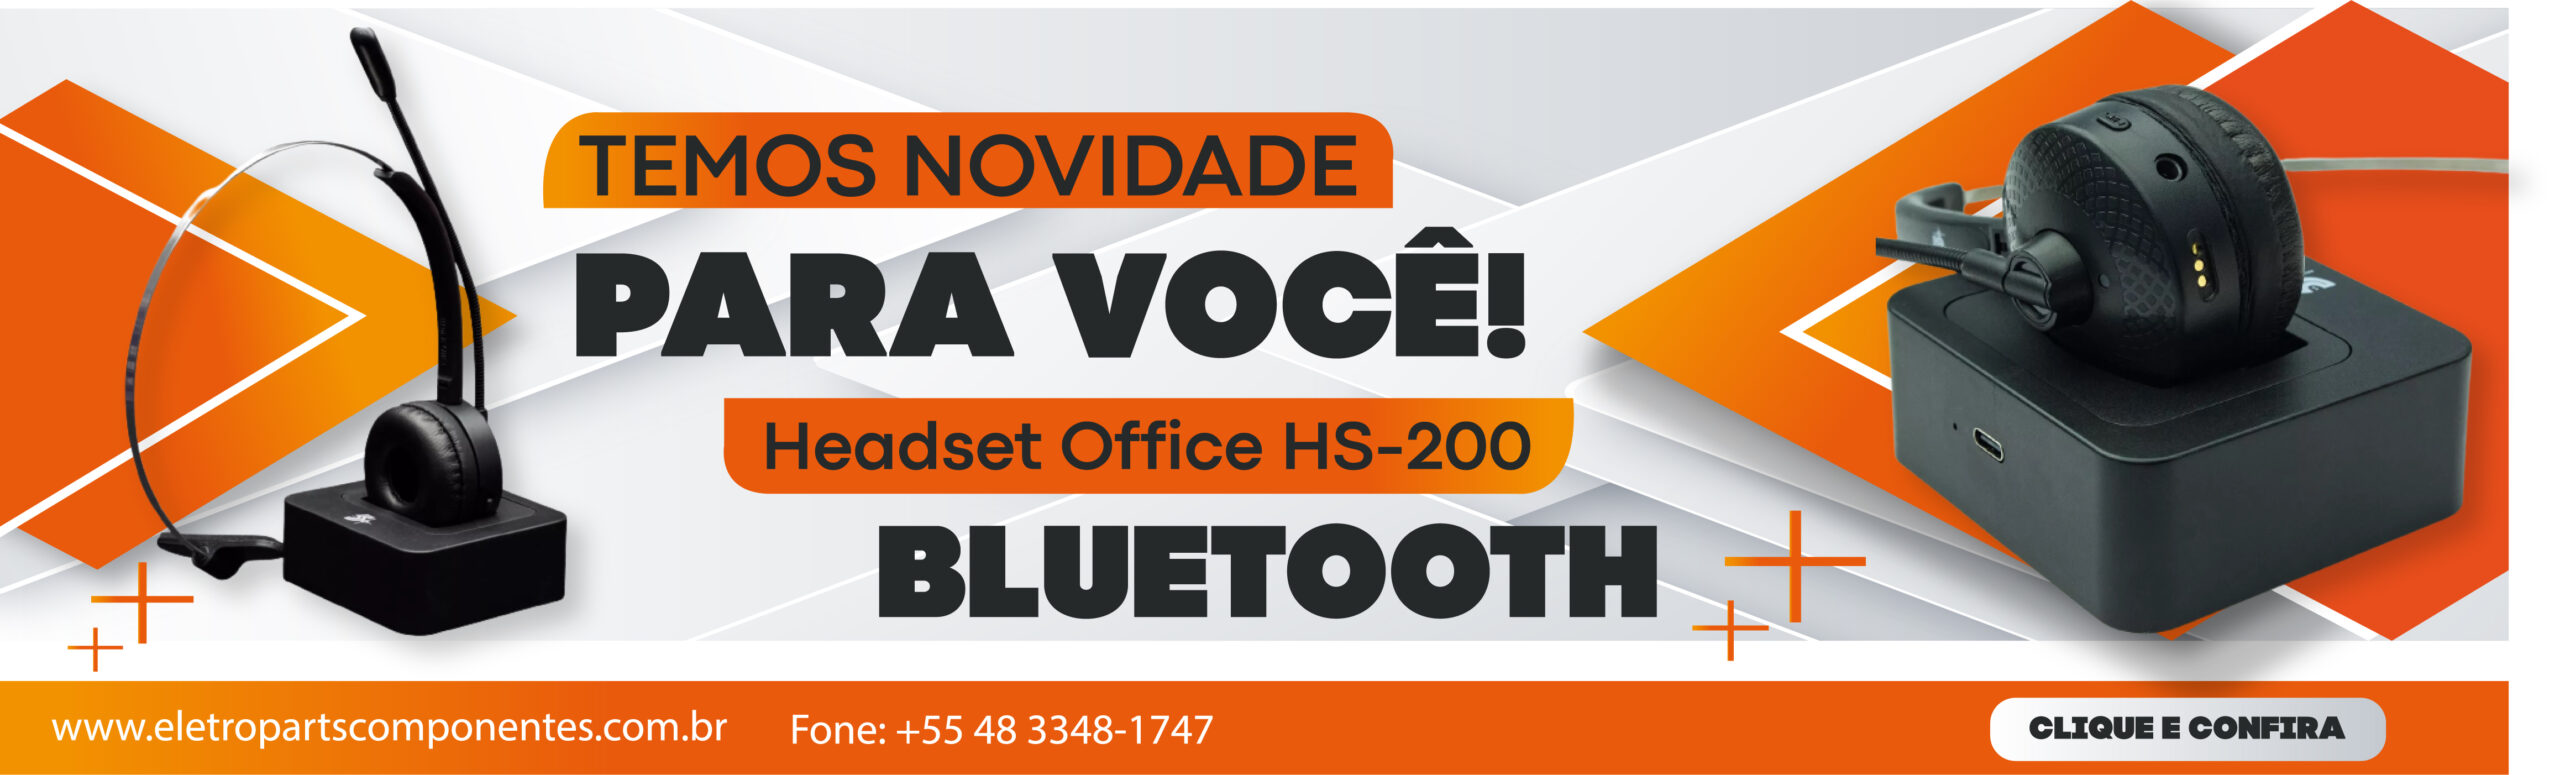 Headset Office Bluetooth HS-200